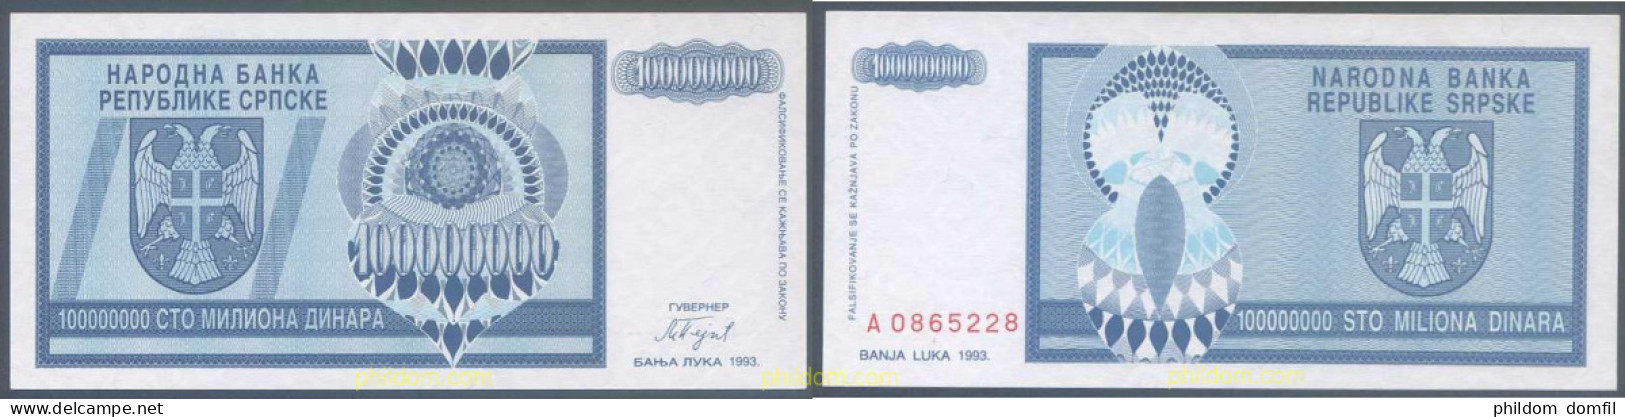 8037 BOSNIA-HERZEGOVINA. Adm Serbia 1993 SERBIA 100000000 DINARA 1993 - Serbie